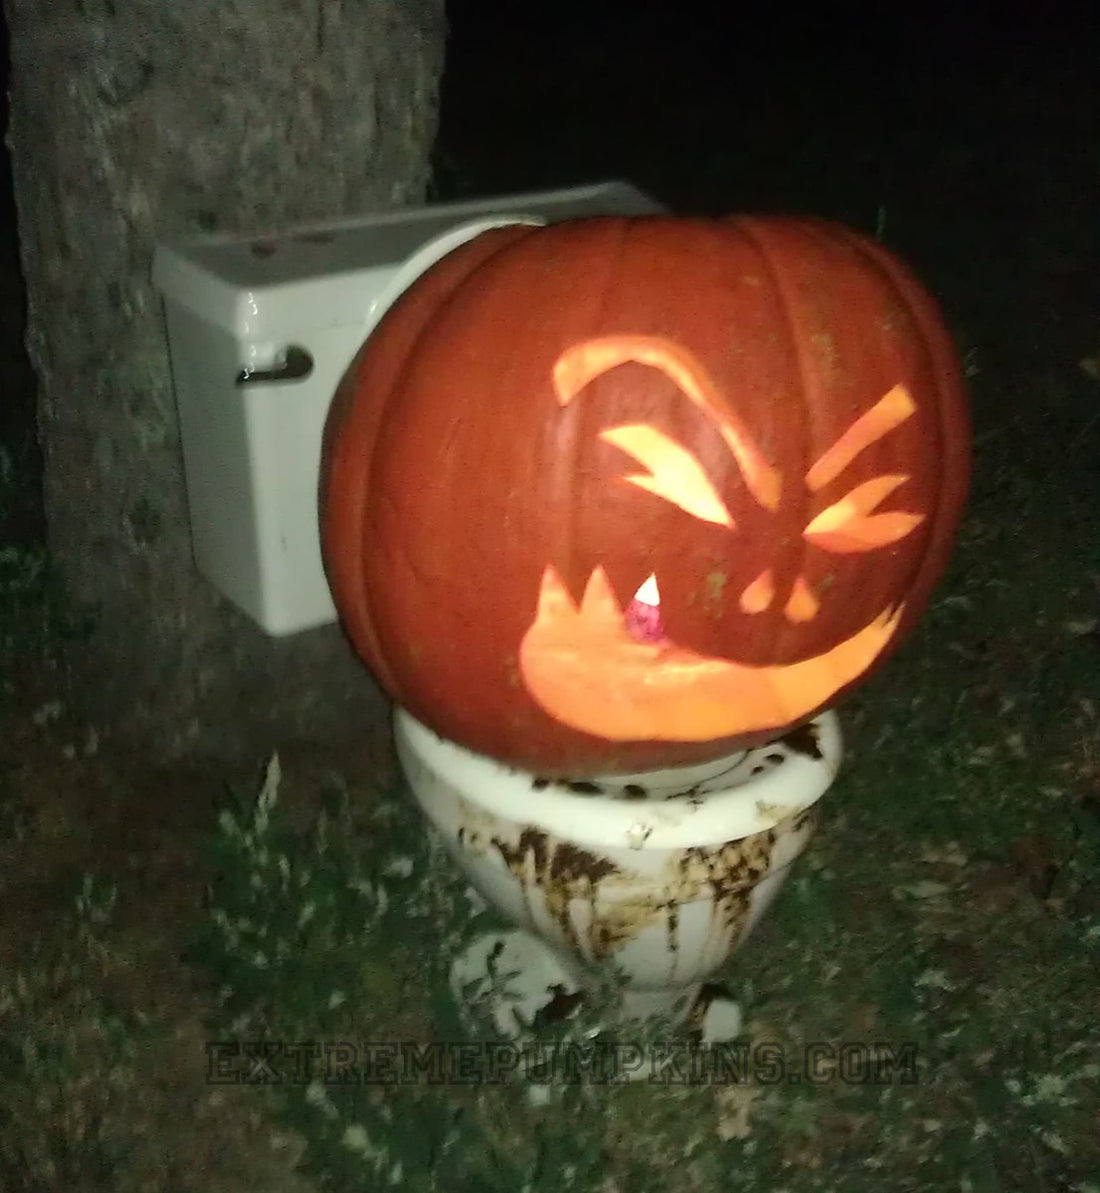 The Toilet Pumpkin